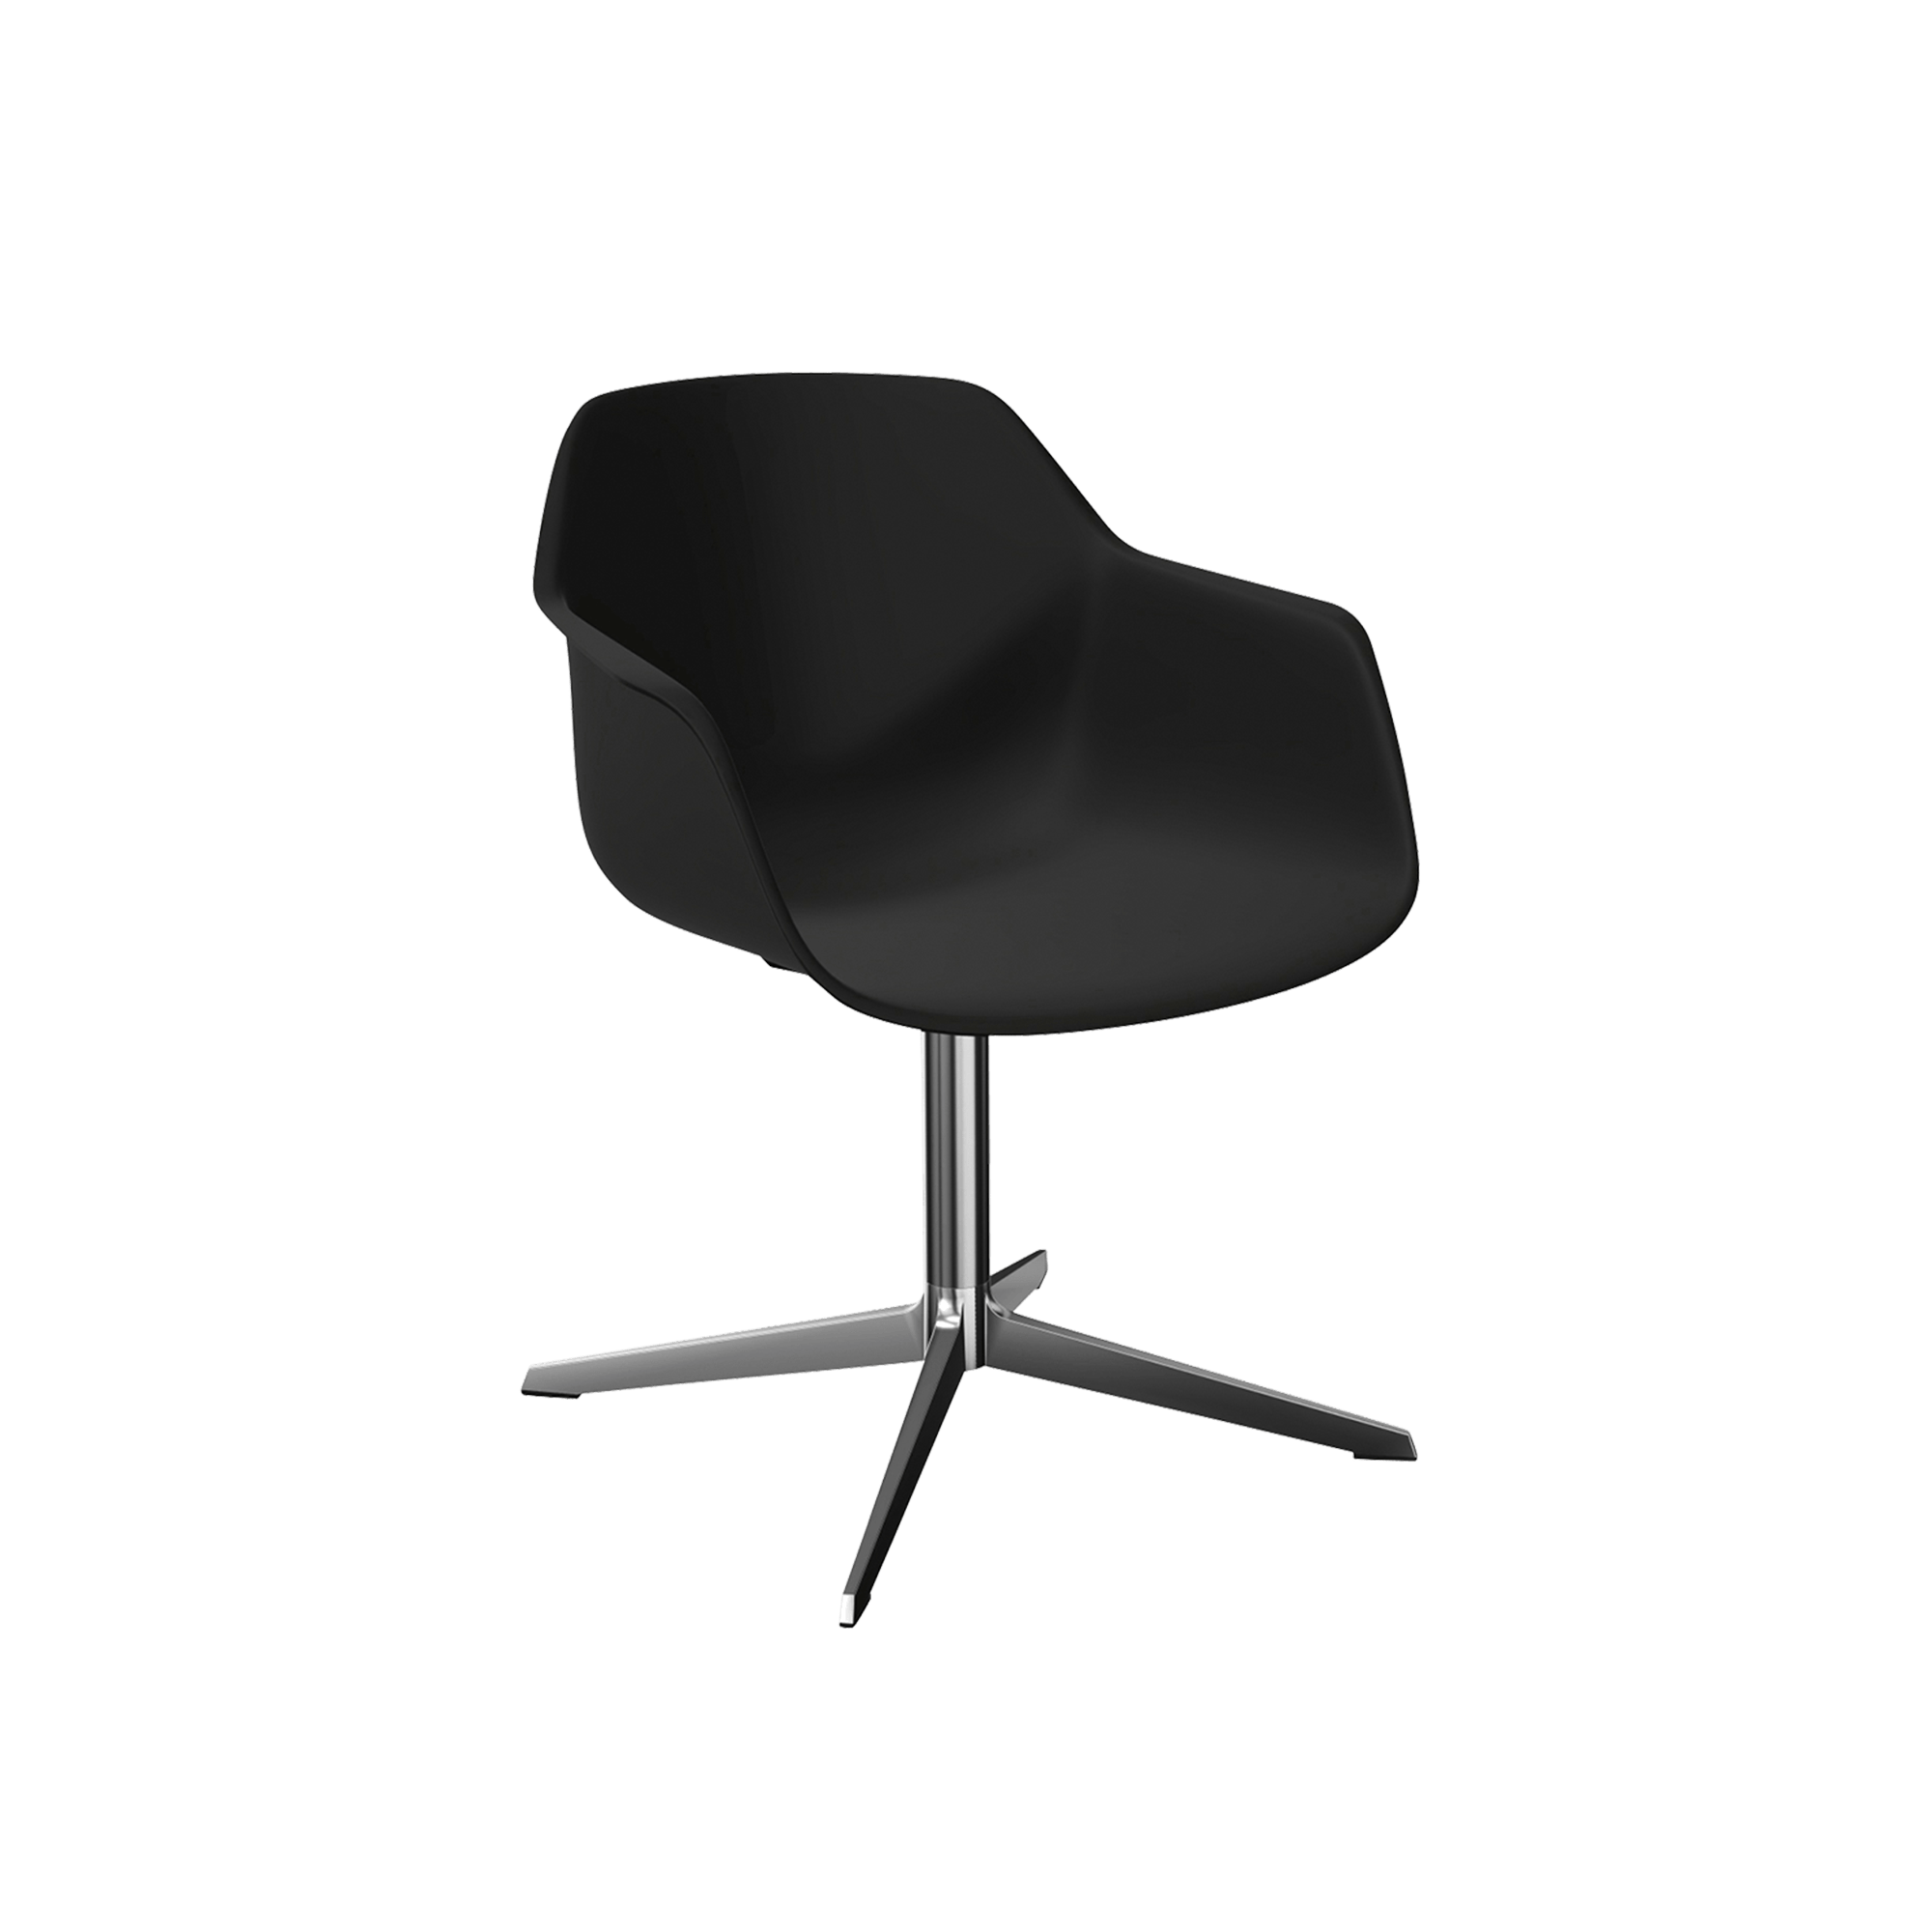 A black swivel chair with a pedestal leg